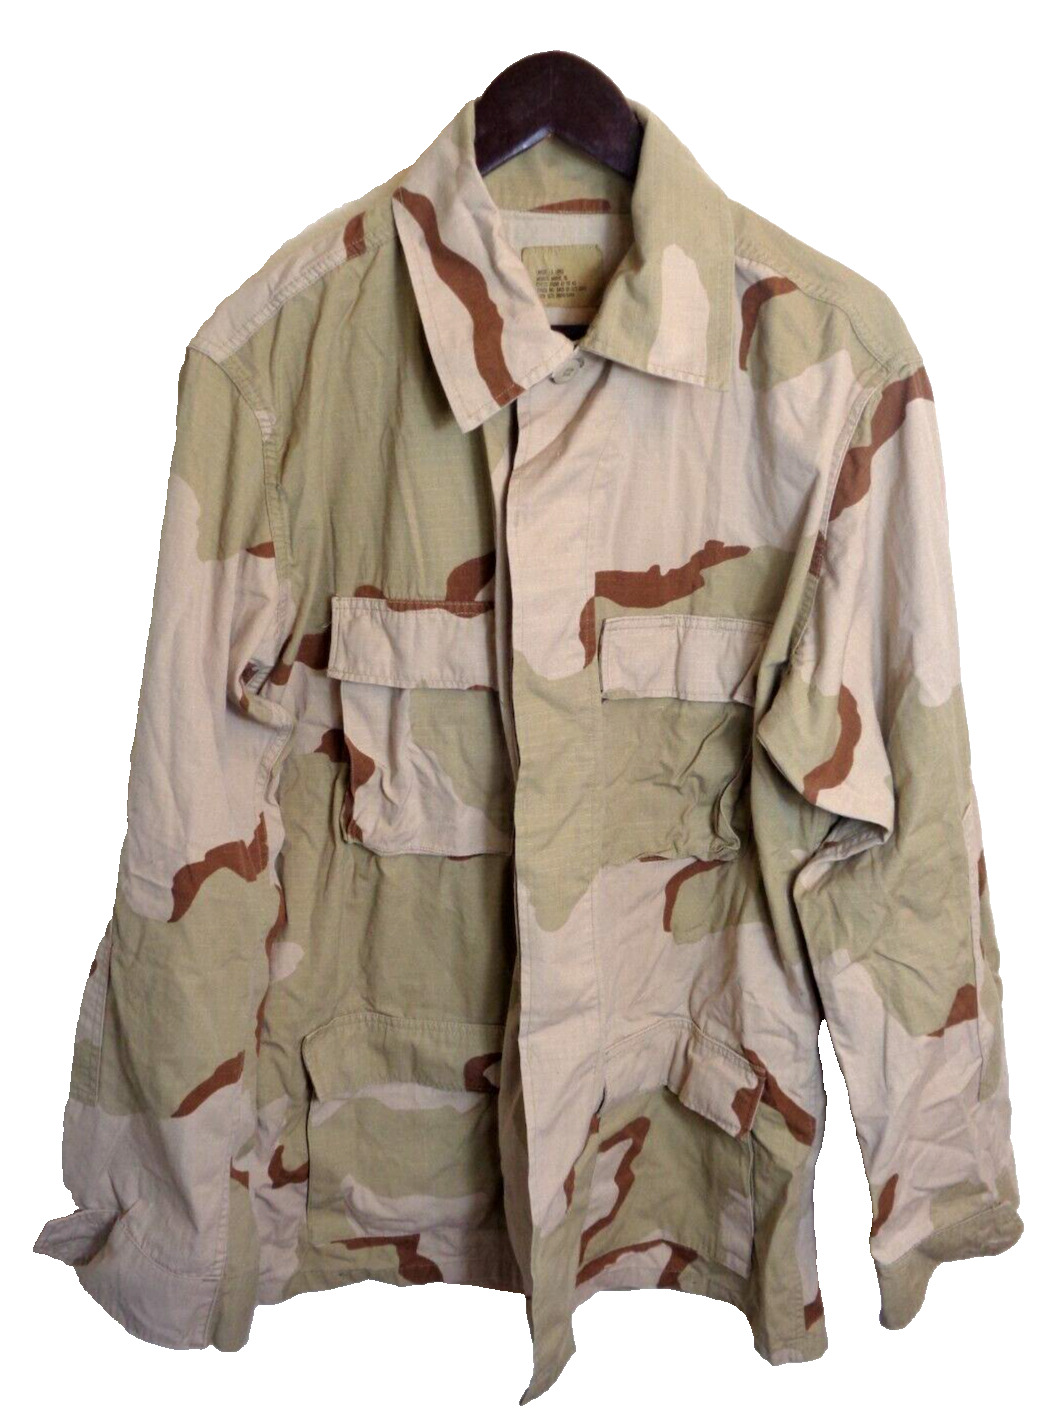 US Military Army Jacket Coat Mens Large X Long  Desert Camo Combat Camouflage